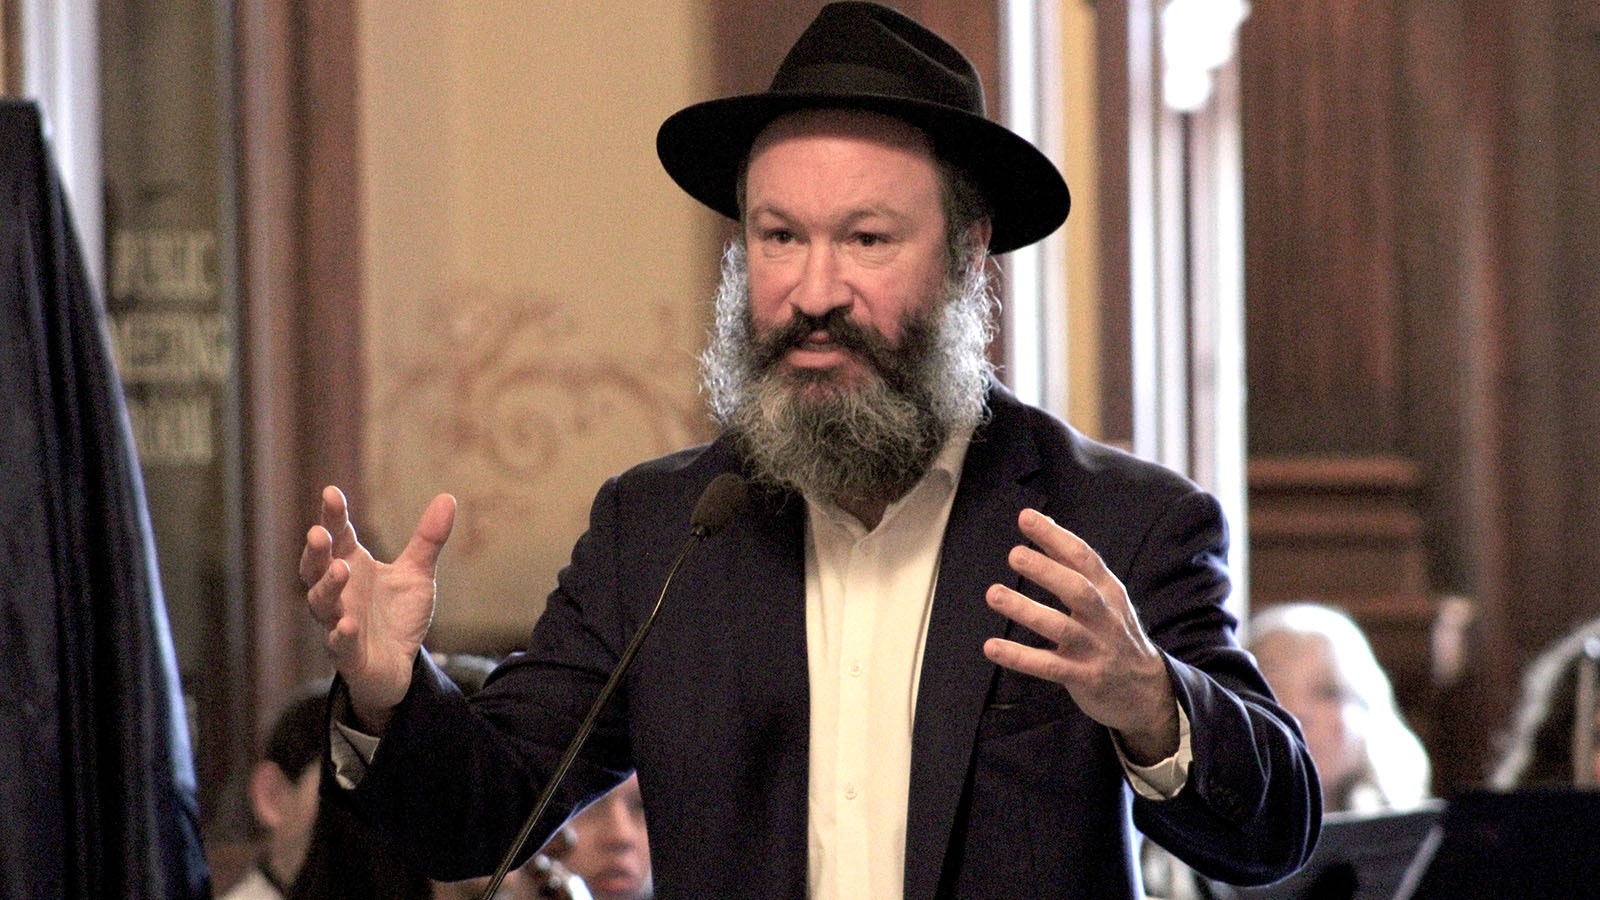 Rabbi Zalman Mendelsohn of the Chabad Jewish Center of Jackson at Monday's Chanukah ceremony at the Wyoming Capitol in Cheyenne.